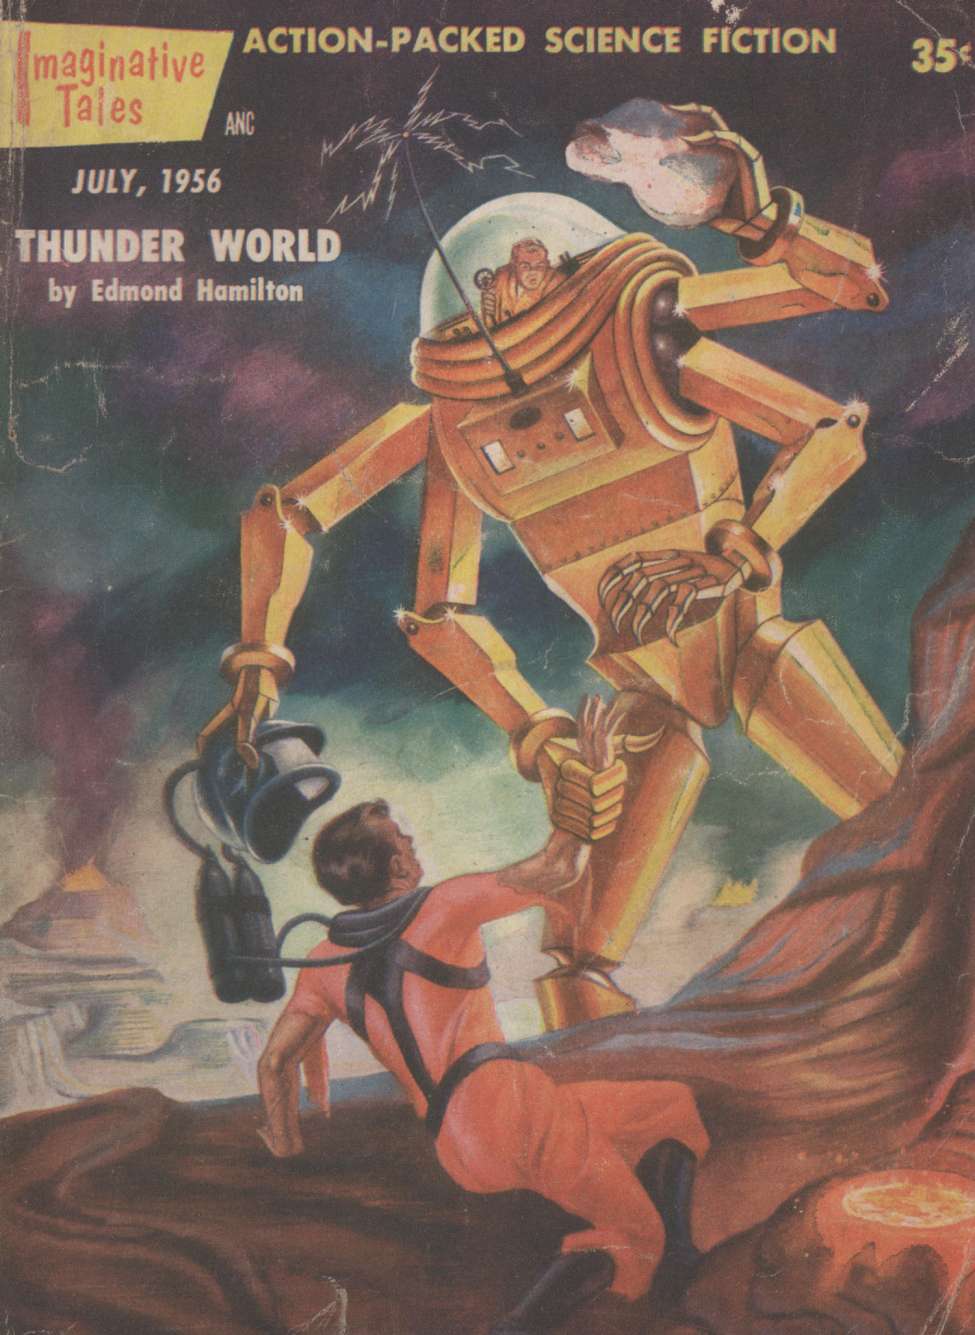 Comic Book Cover For Imaginative Tales v3 4 - Thunder World - Edmond Hamilton